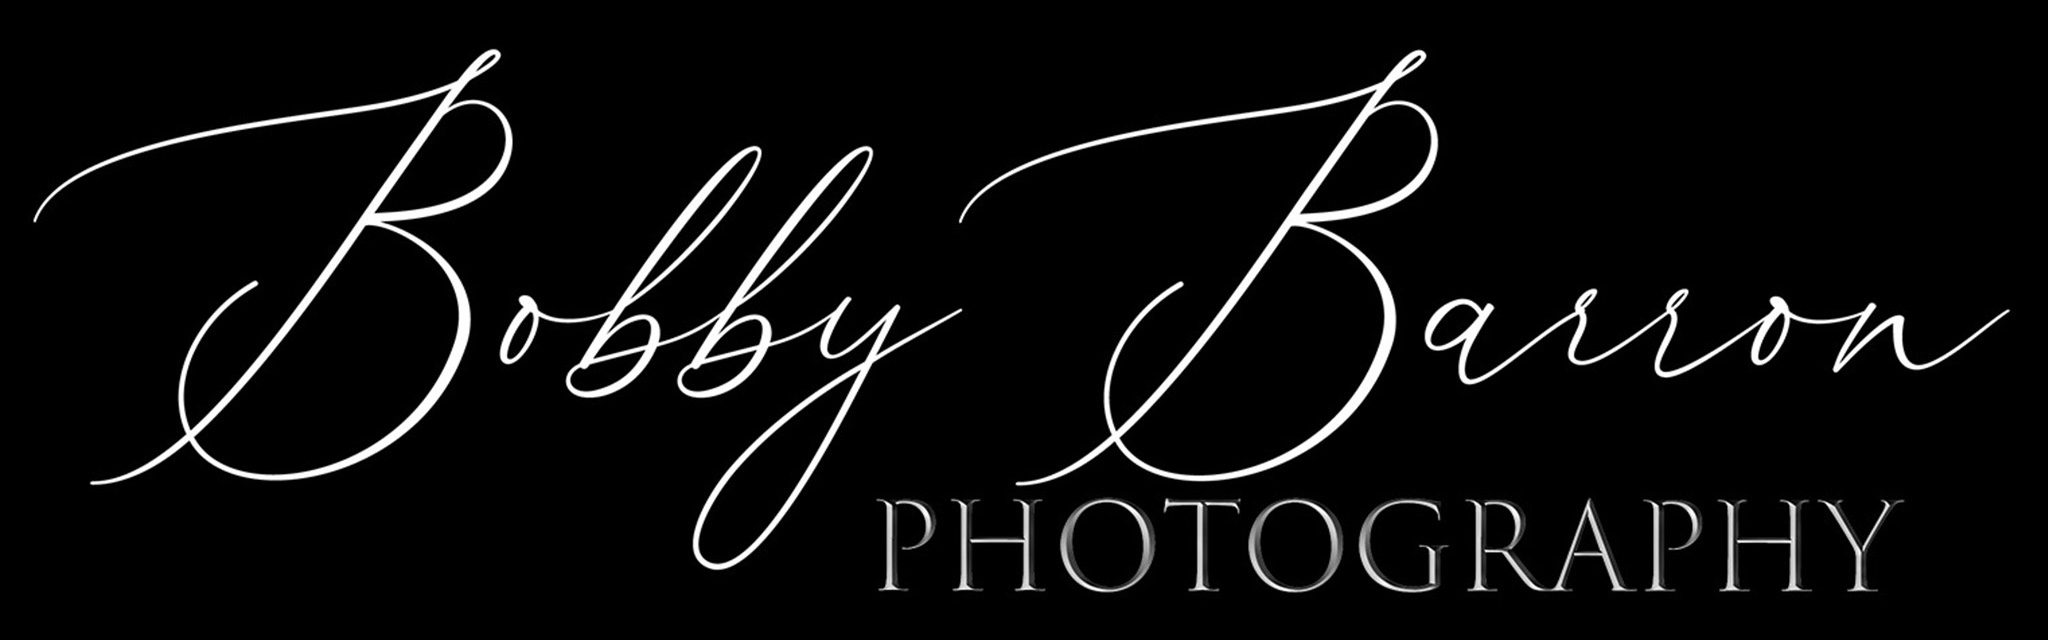 Bobby Barron Photography